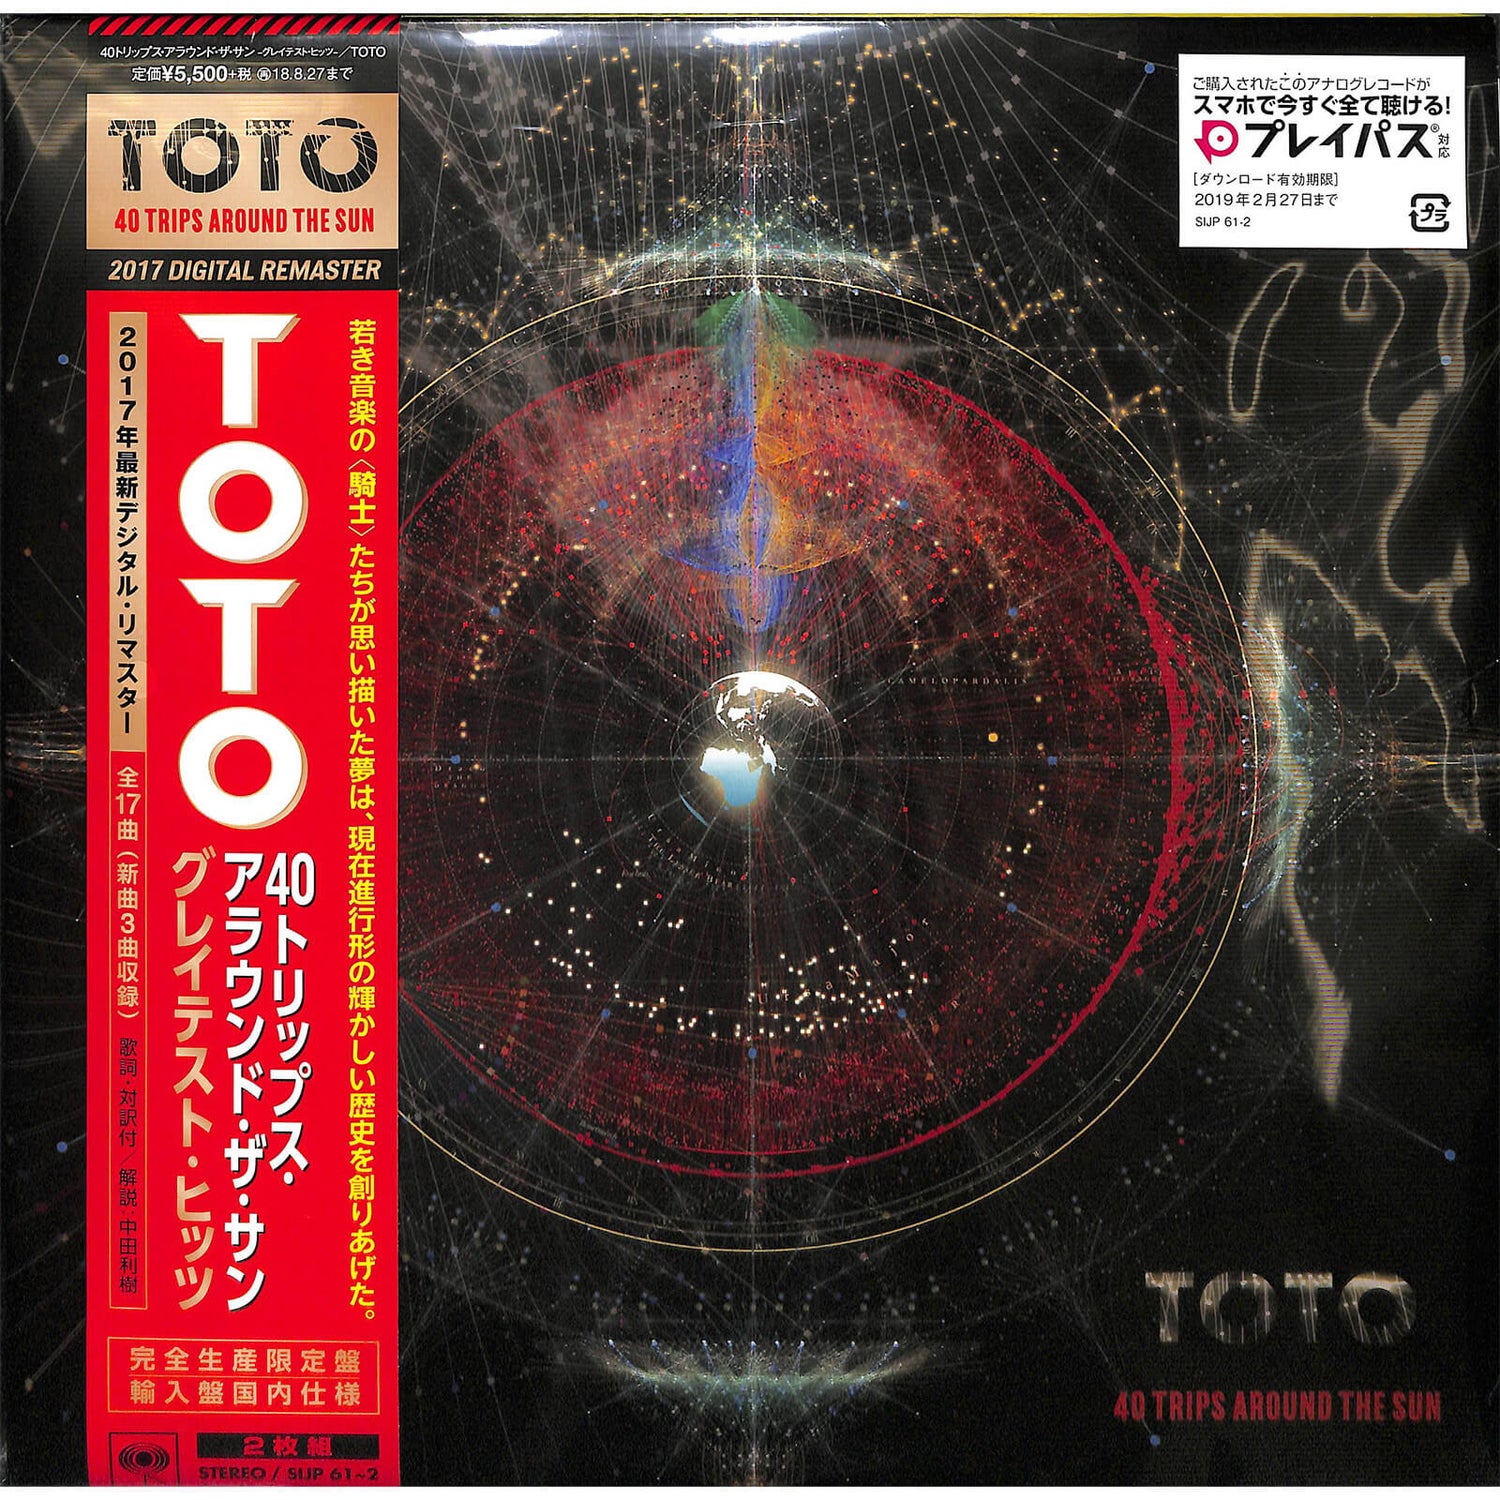 Toto - 40 Trips Around The Sun -Greatest Hits- (Limited Edition) LP Japanische Ausgabe